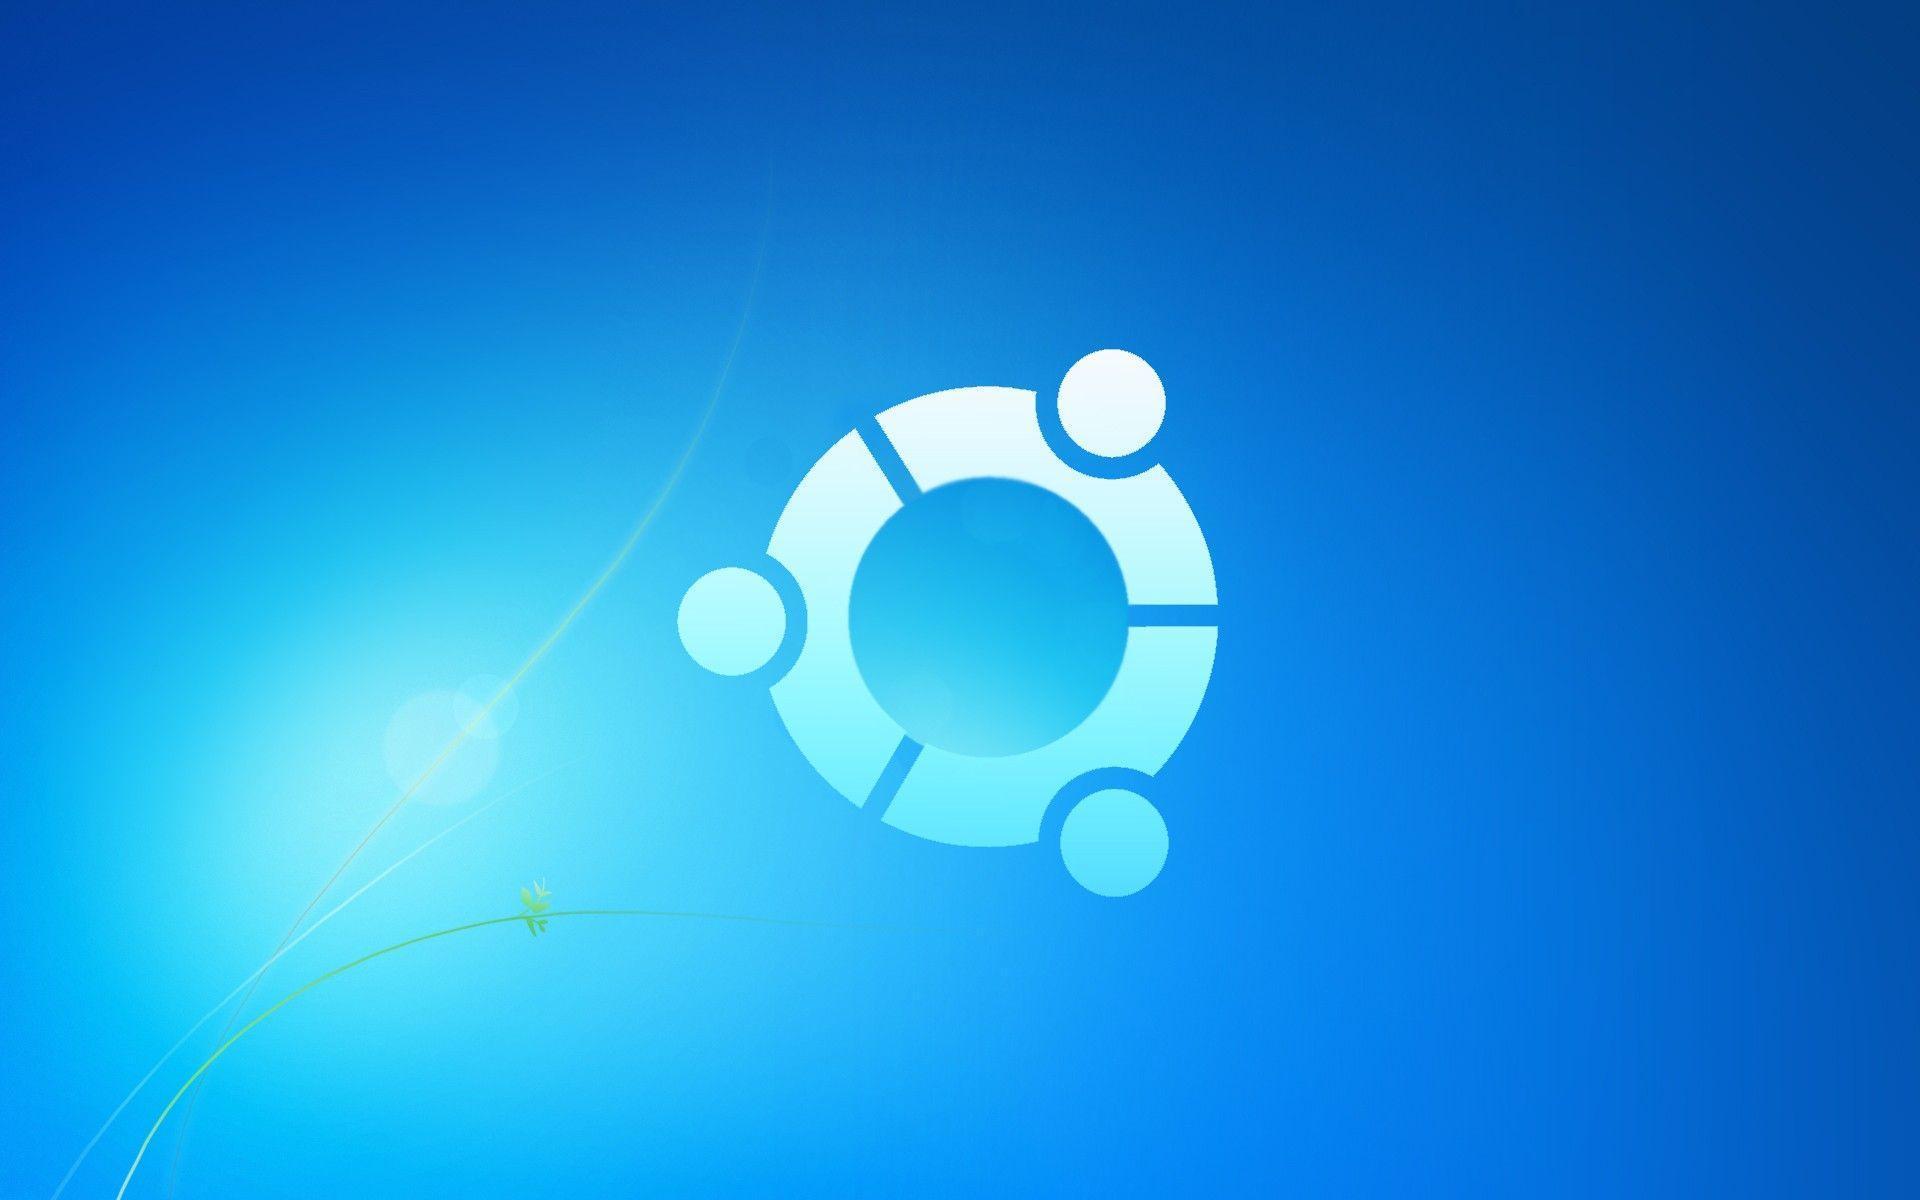 Linux desktop wallpaper in HD logos to classic OS art